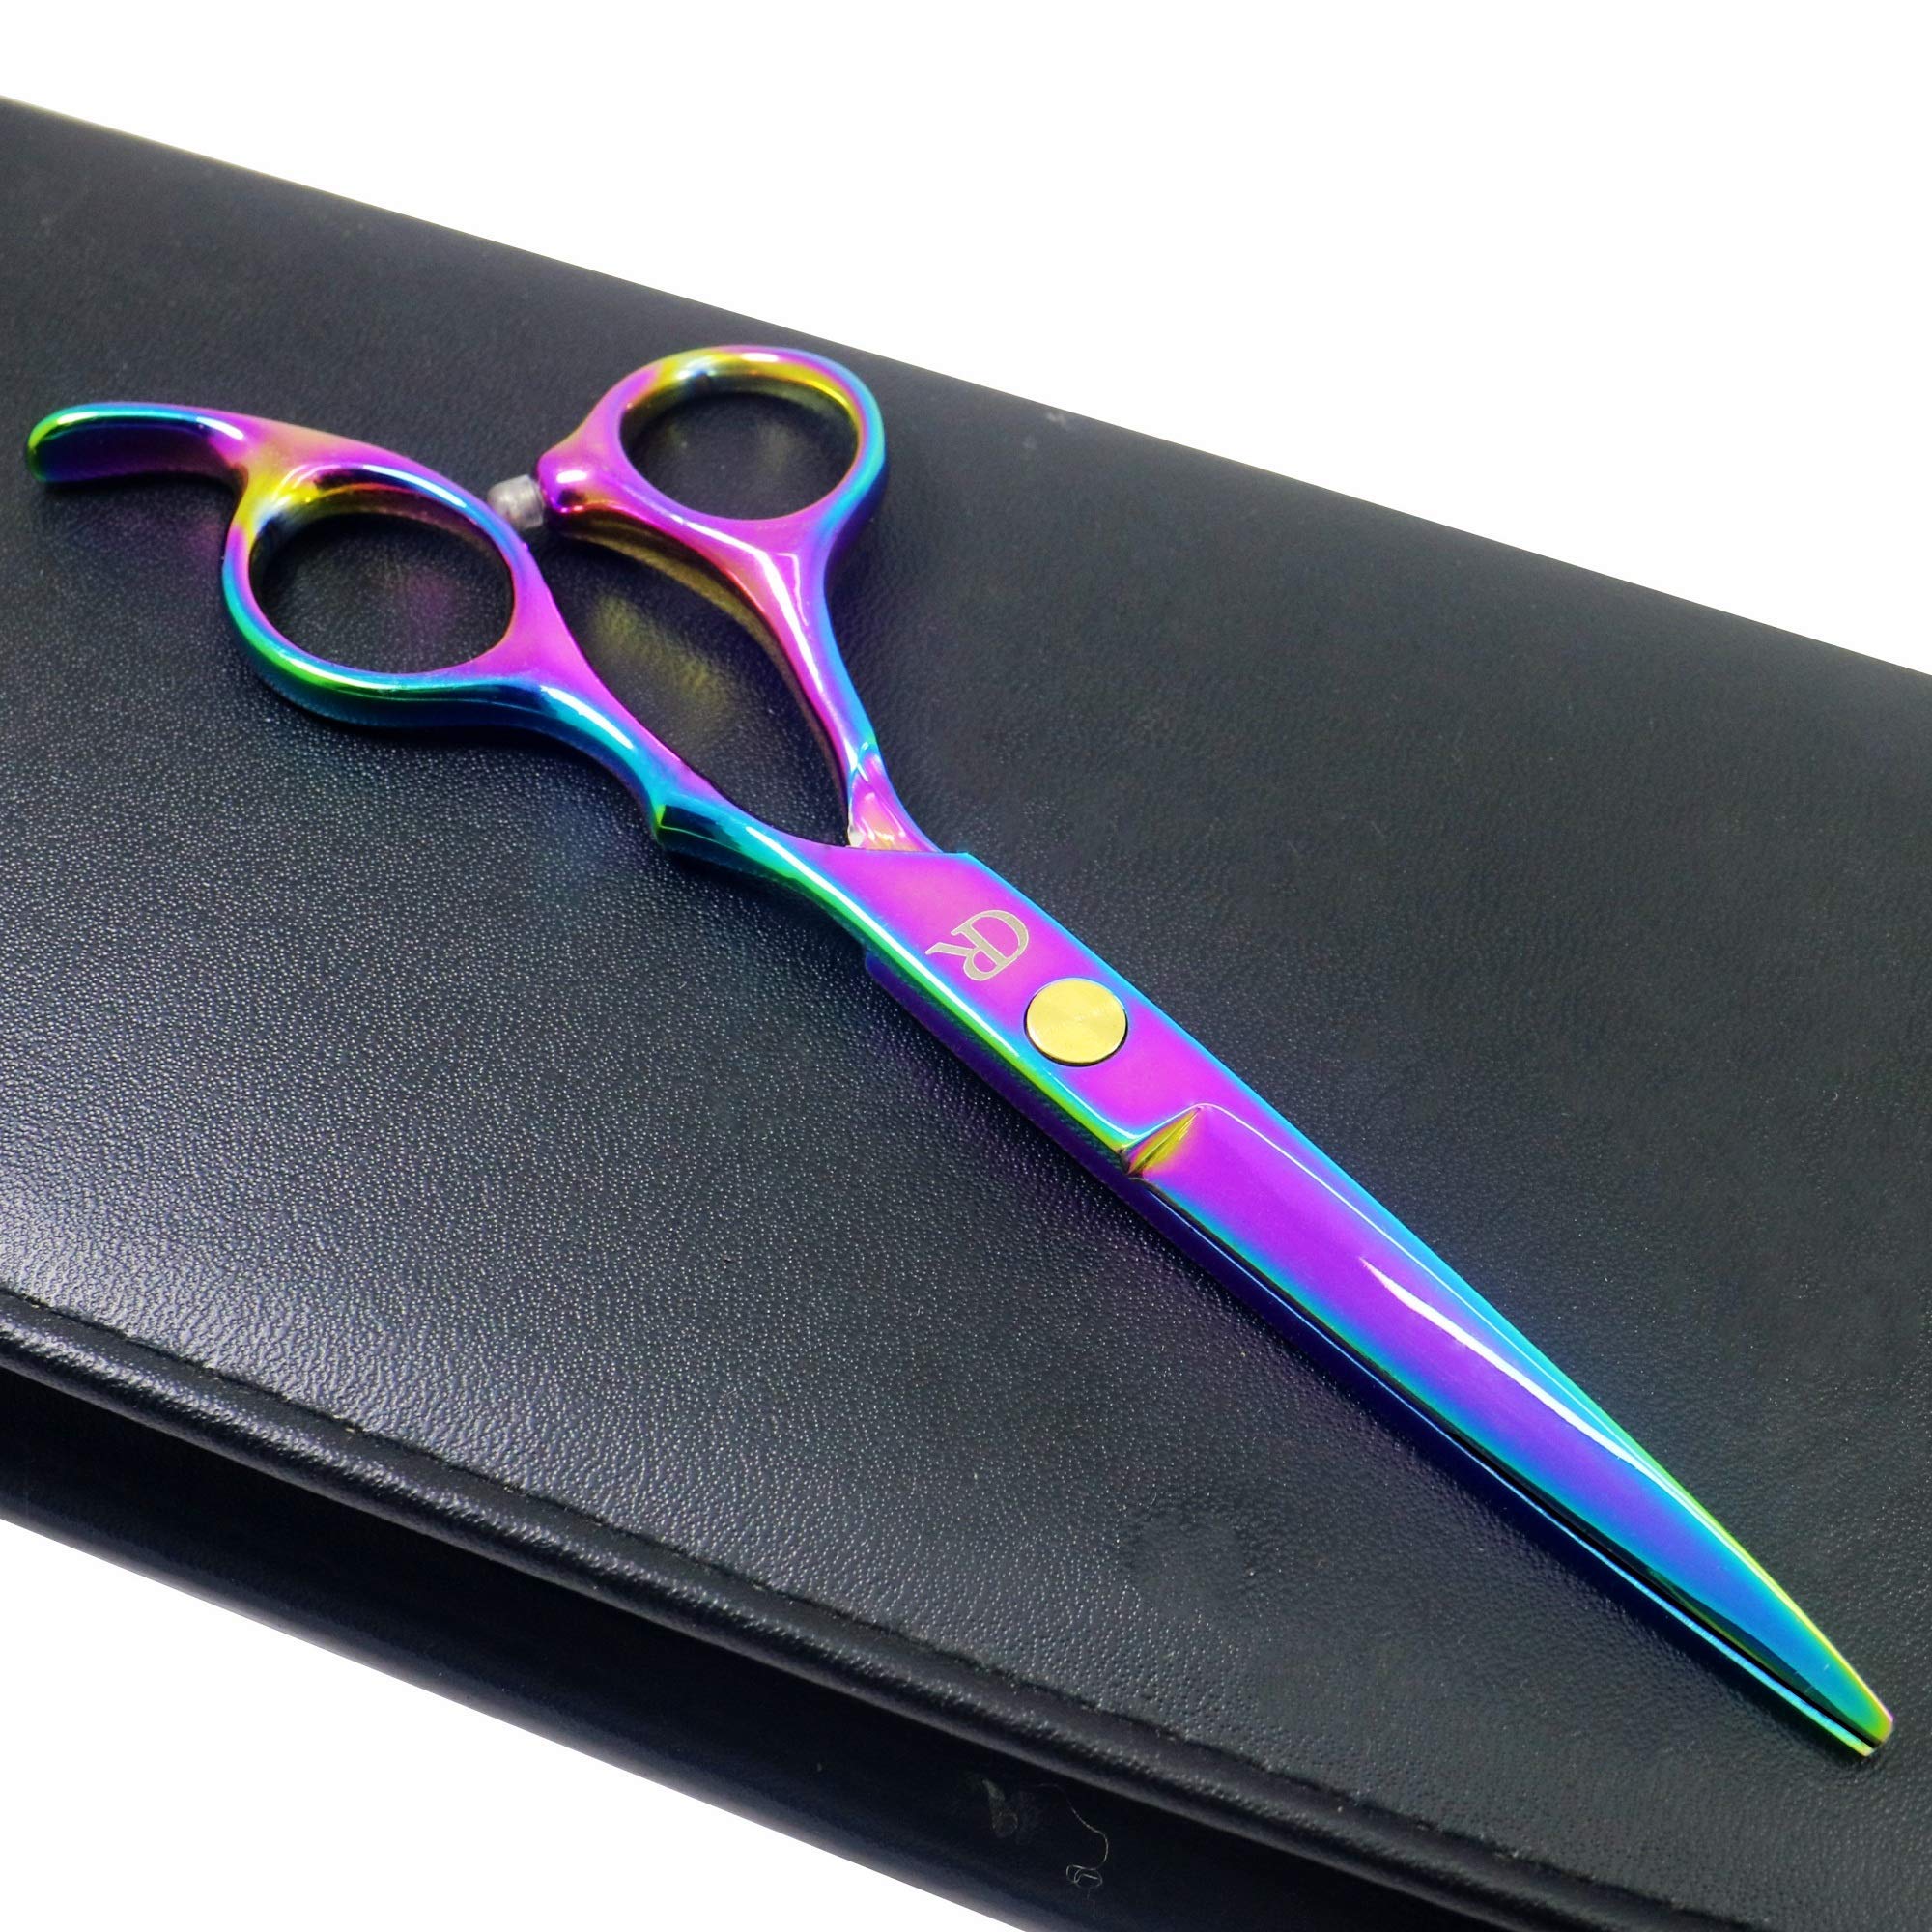 Professional Hair Cutting Shears,6 Inch Barber hair Cutting Scissors Sharp Blades Hairdresser Haircut For Women/Men/kids 420c Stainless Steel Rainbow Color (A) (A)